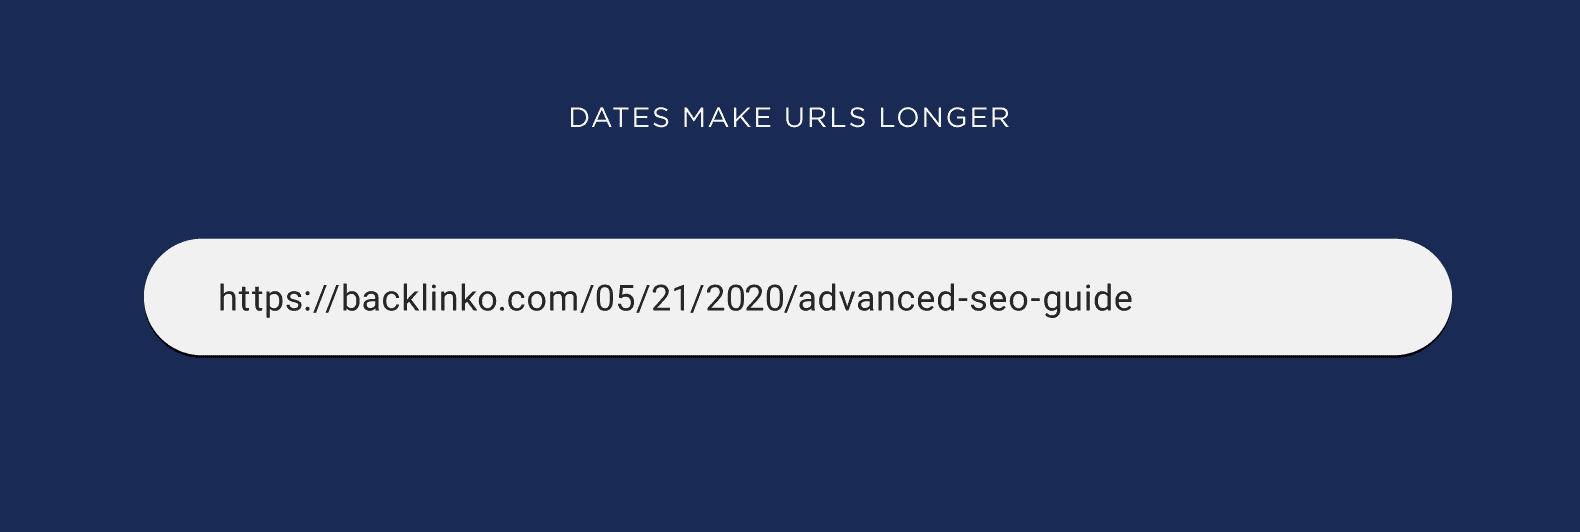 Dates Make URLs Longer Visual